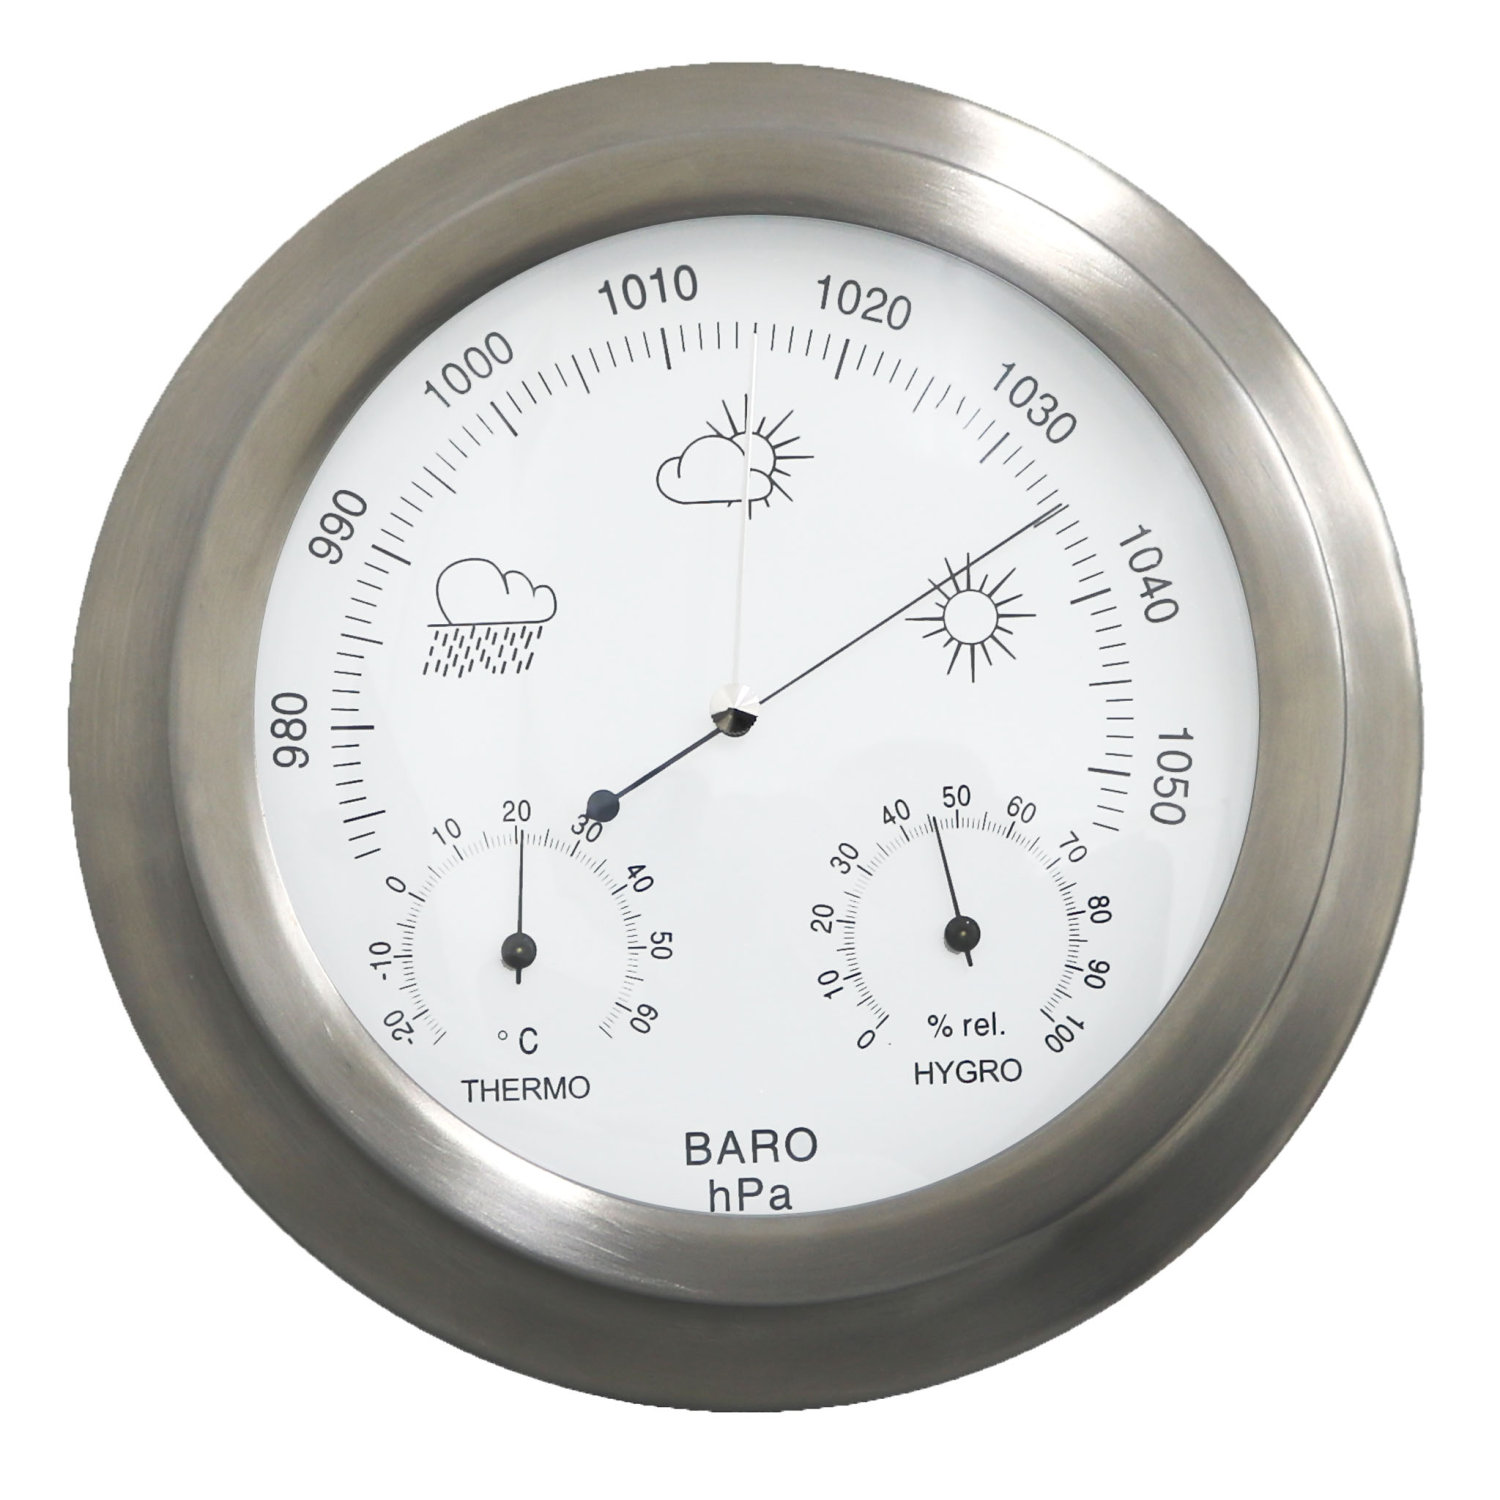 Barometer,barometers for The Home,barometers Weather Instruments,Weather Barometer,Outdoor Barometer,Garden Weather Station 